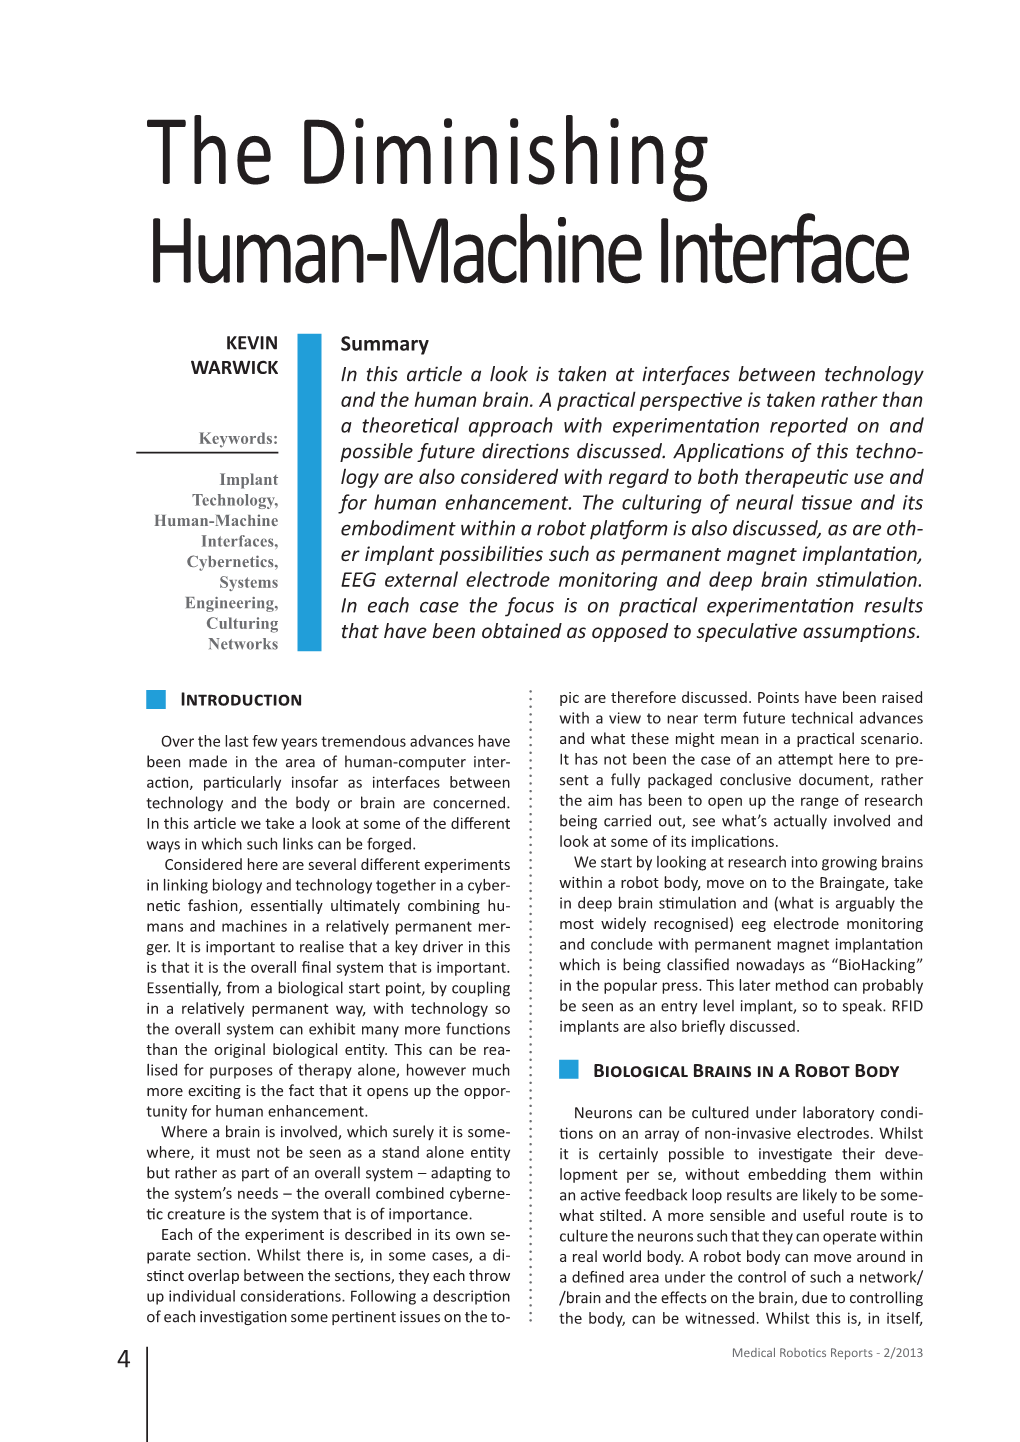 The Diminishing Human-Machine Interface